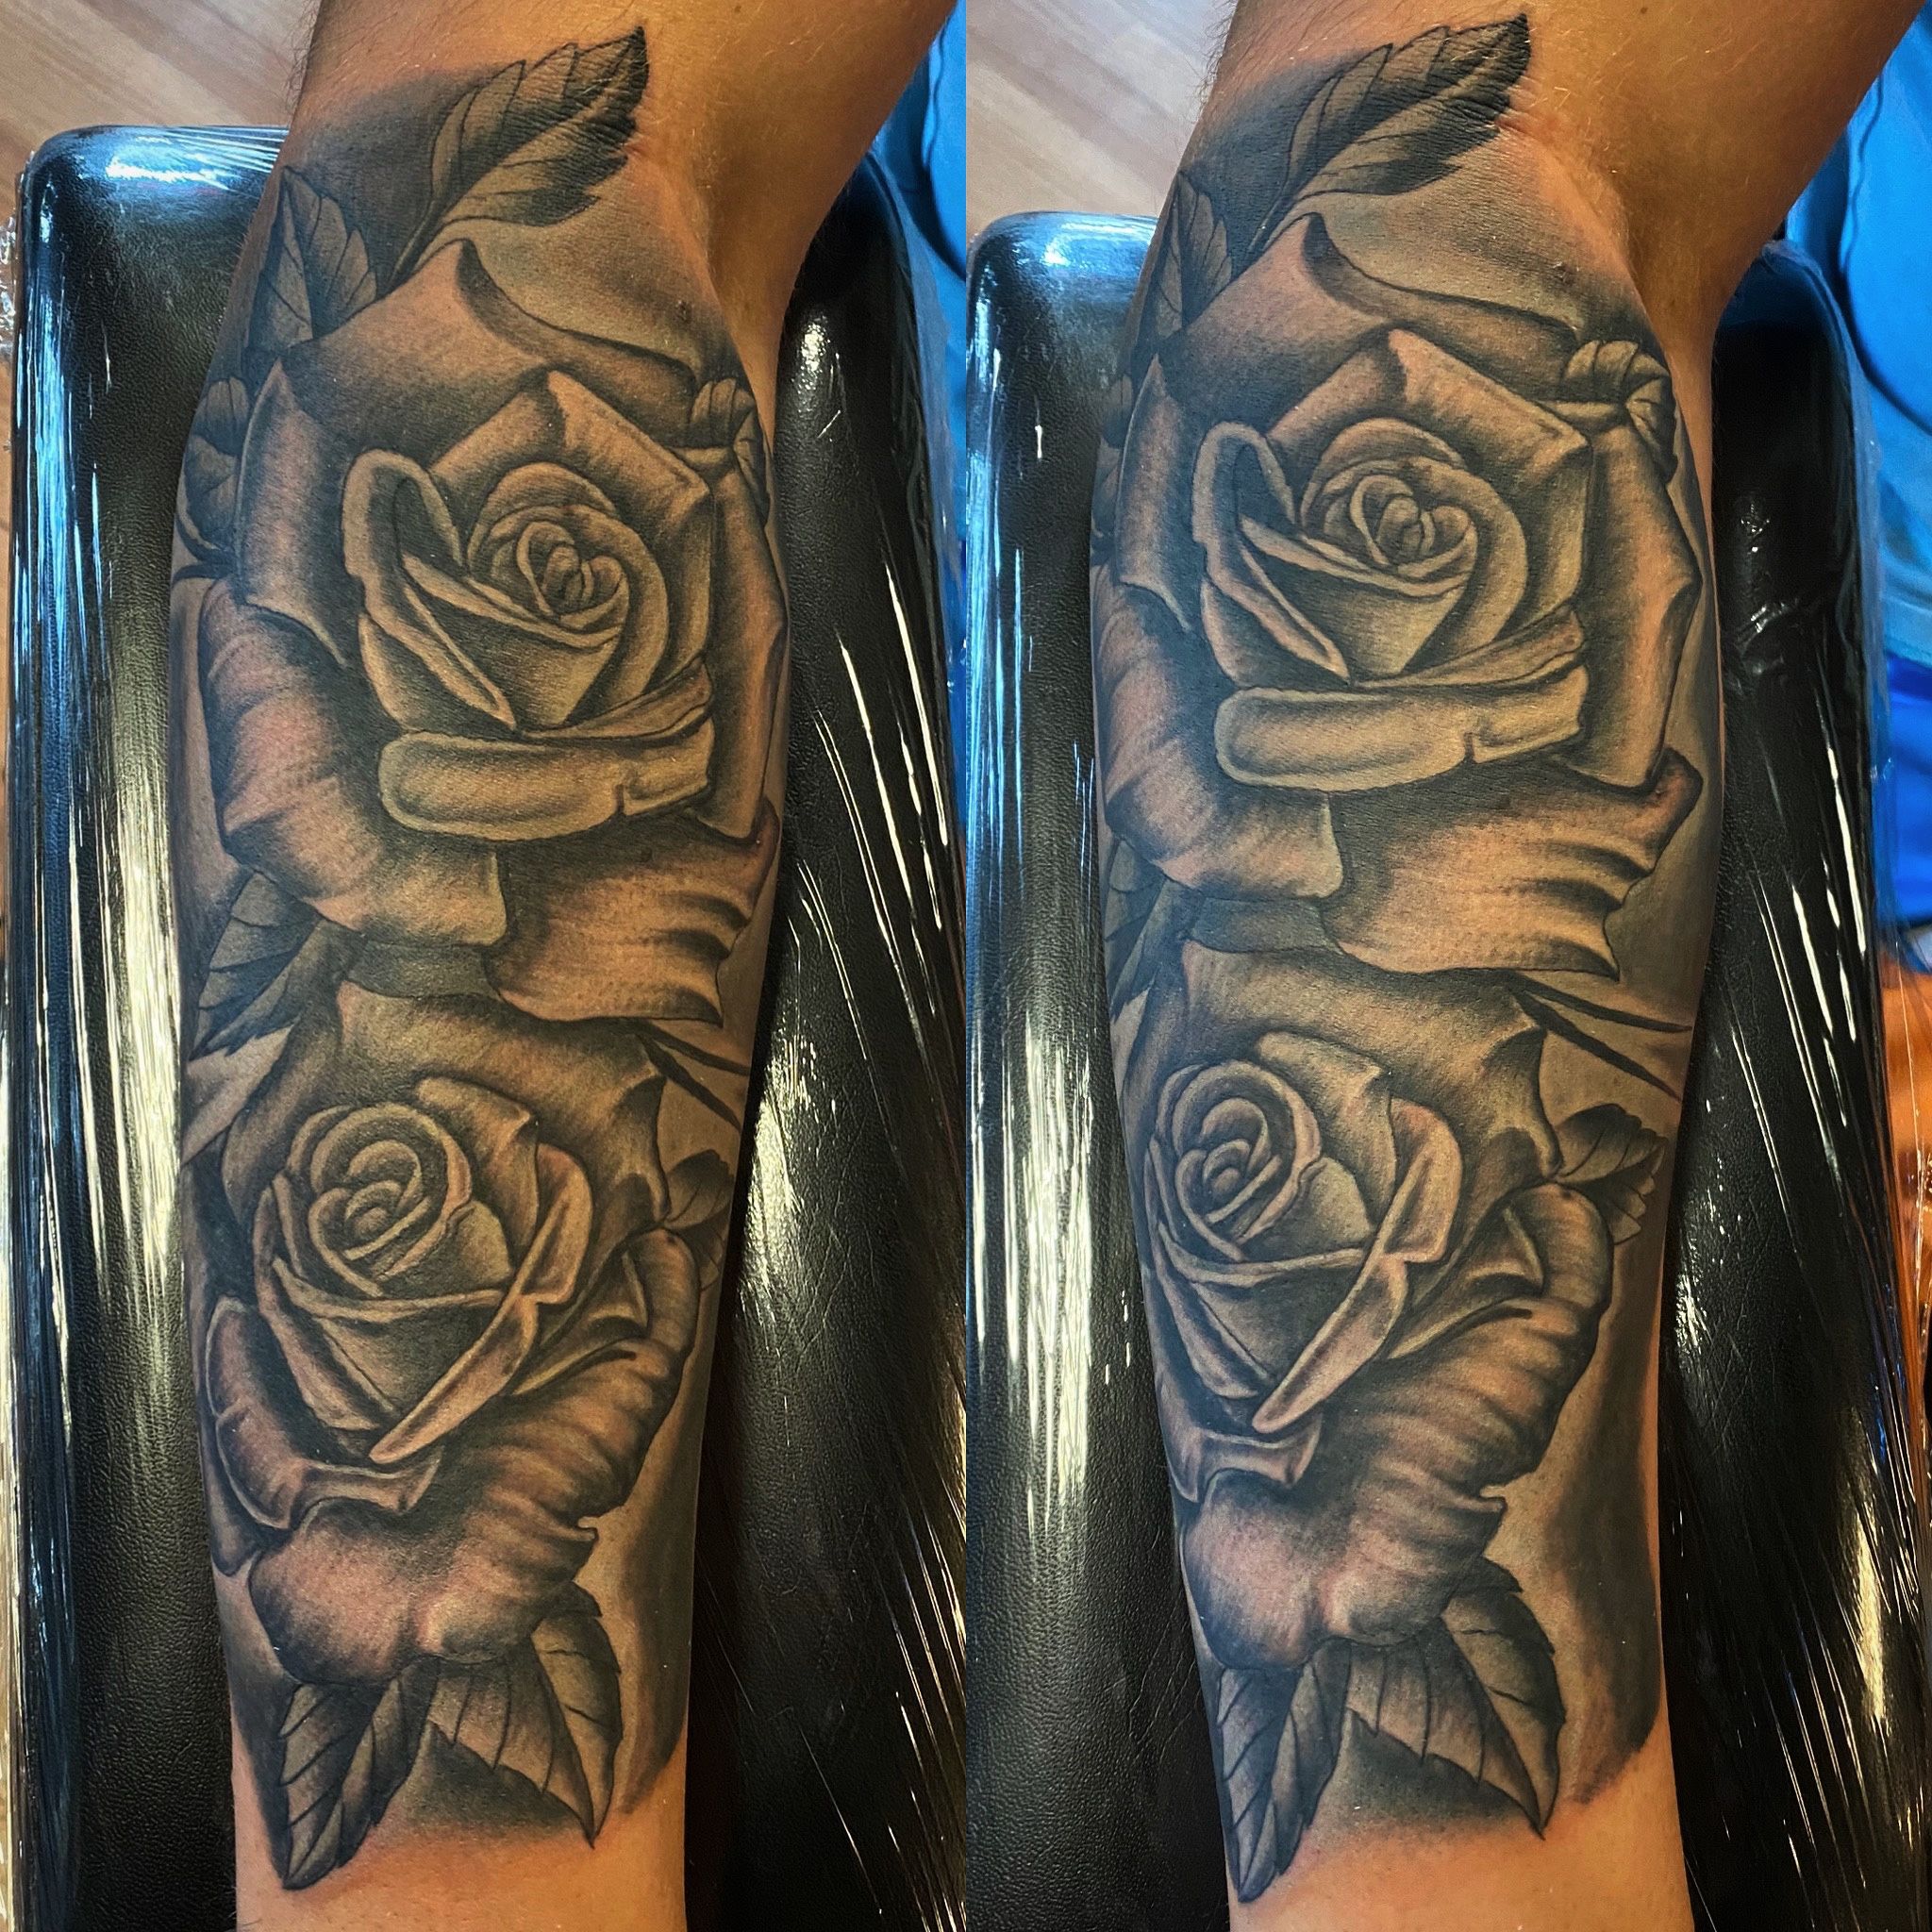 Tattoo uploaded by @tikistevetattoo • Black and gray roses on inner forearm clients first tattoo • Tattoodo